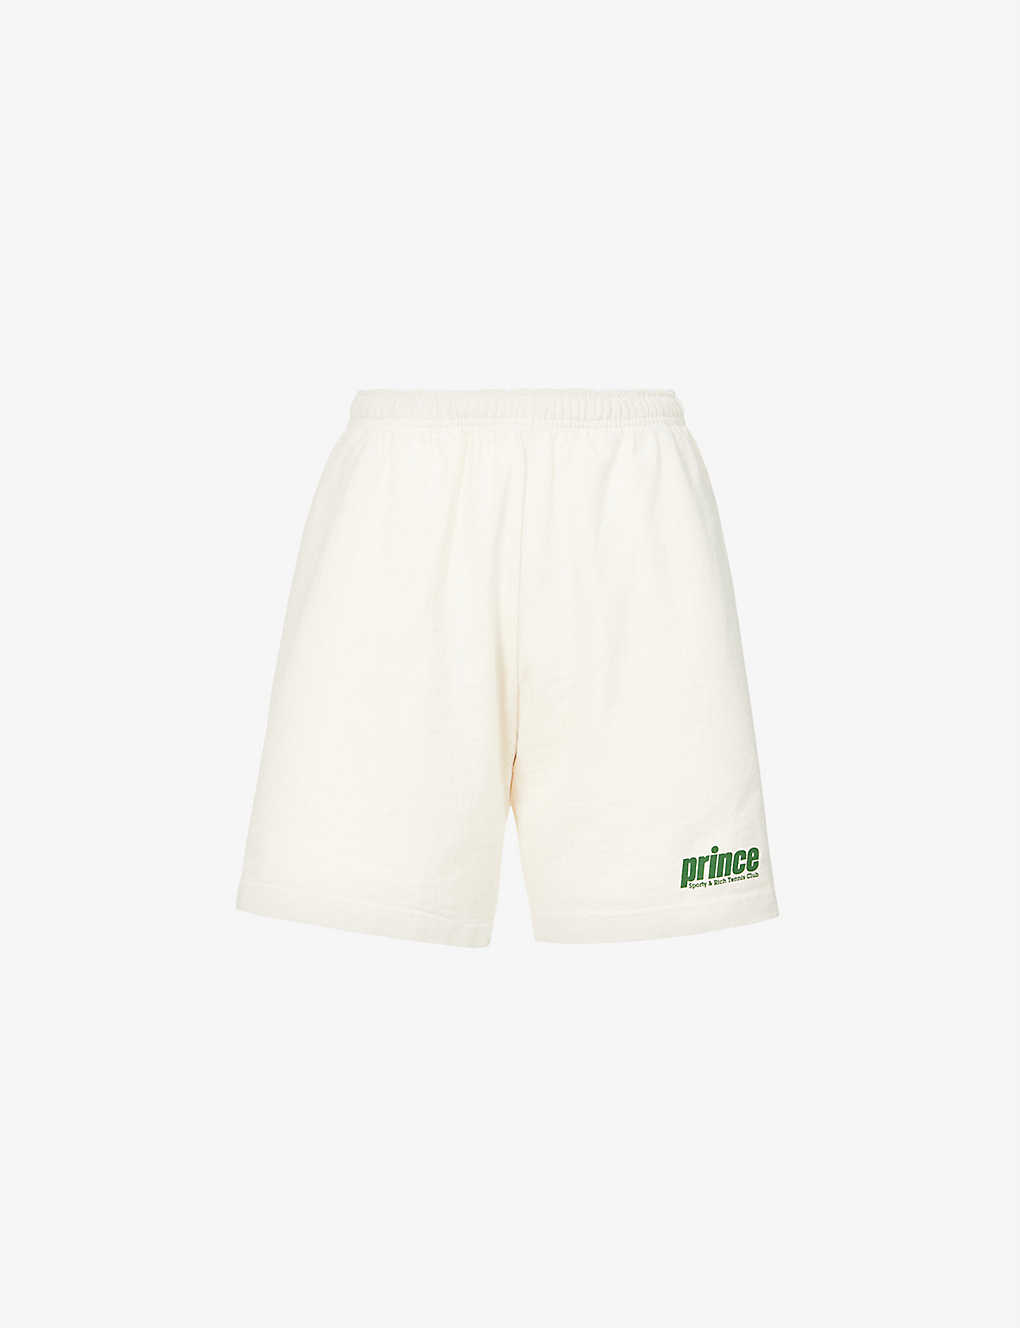 Selfridges & Co Women Sport & Swimwear Sportswear Sports Shorts X Prince brand-embroidered mid-rise cotton shorts 